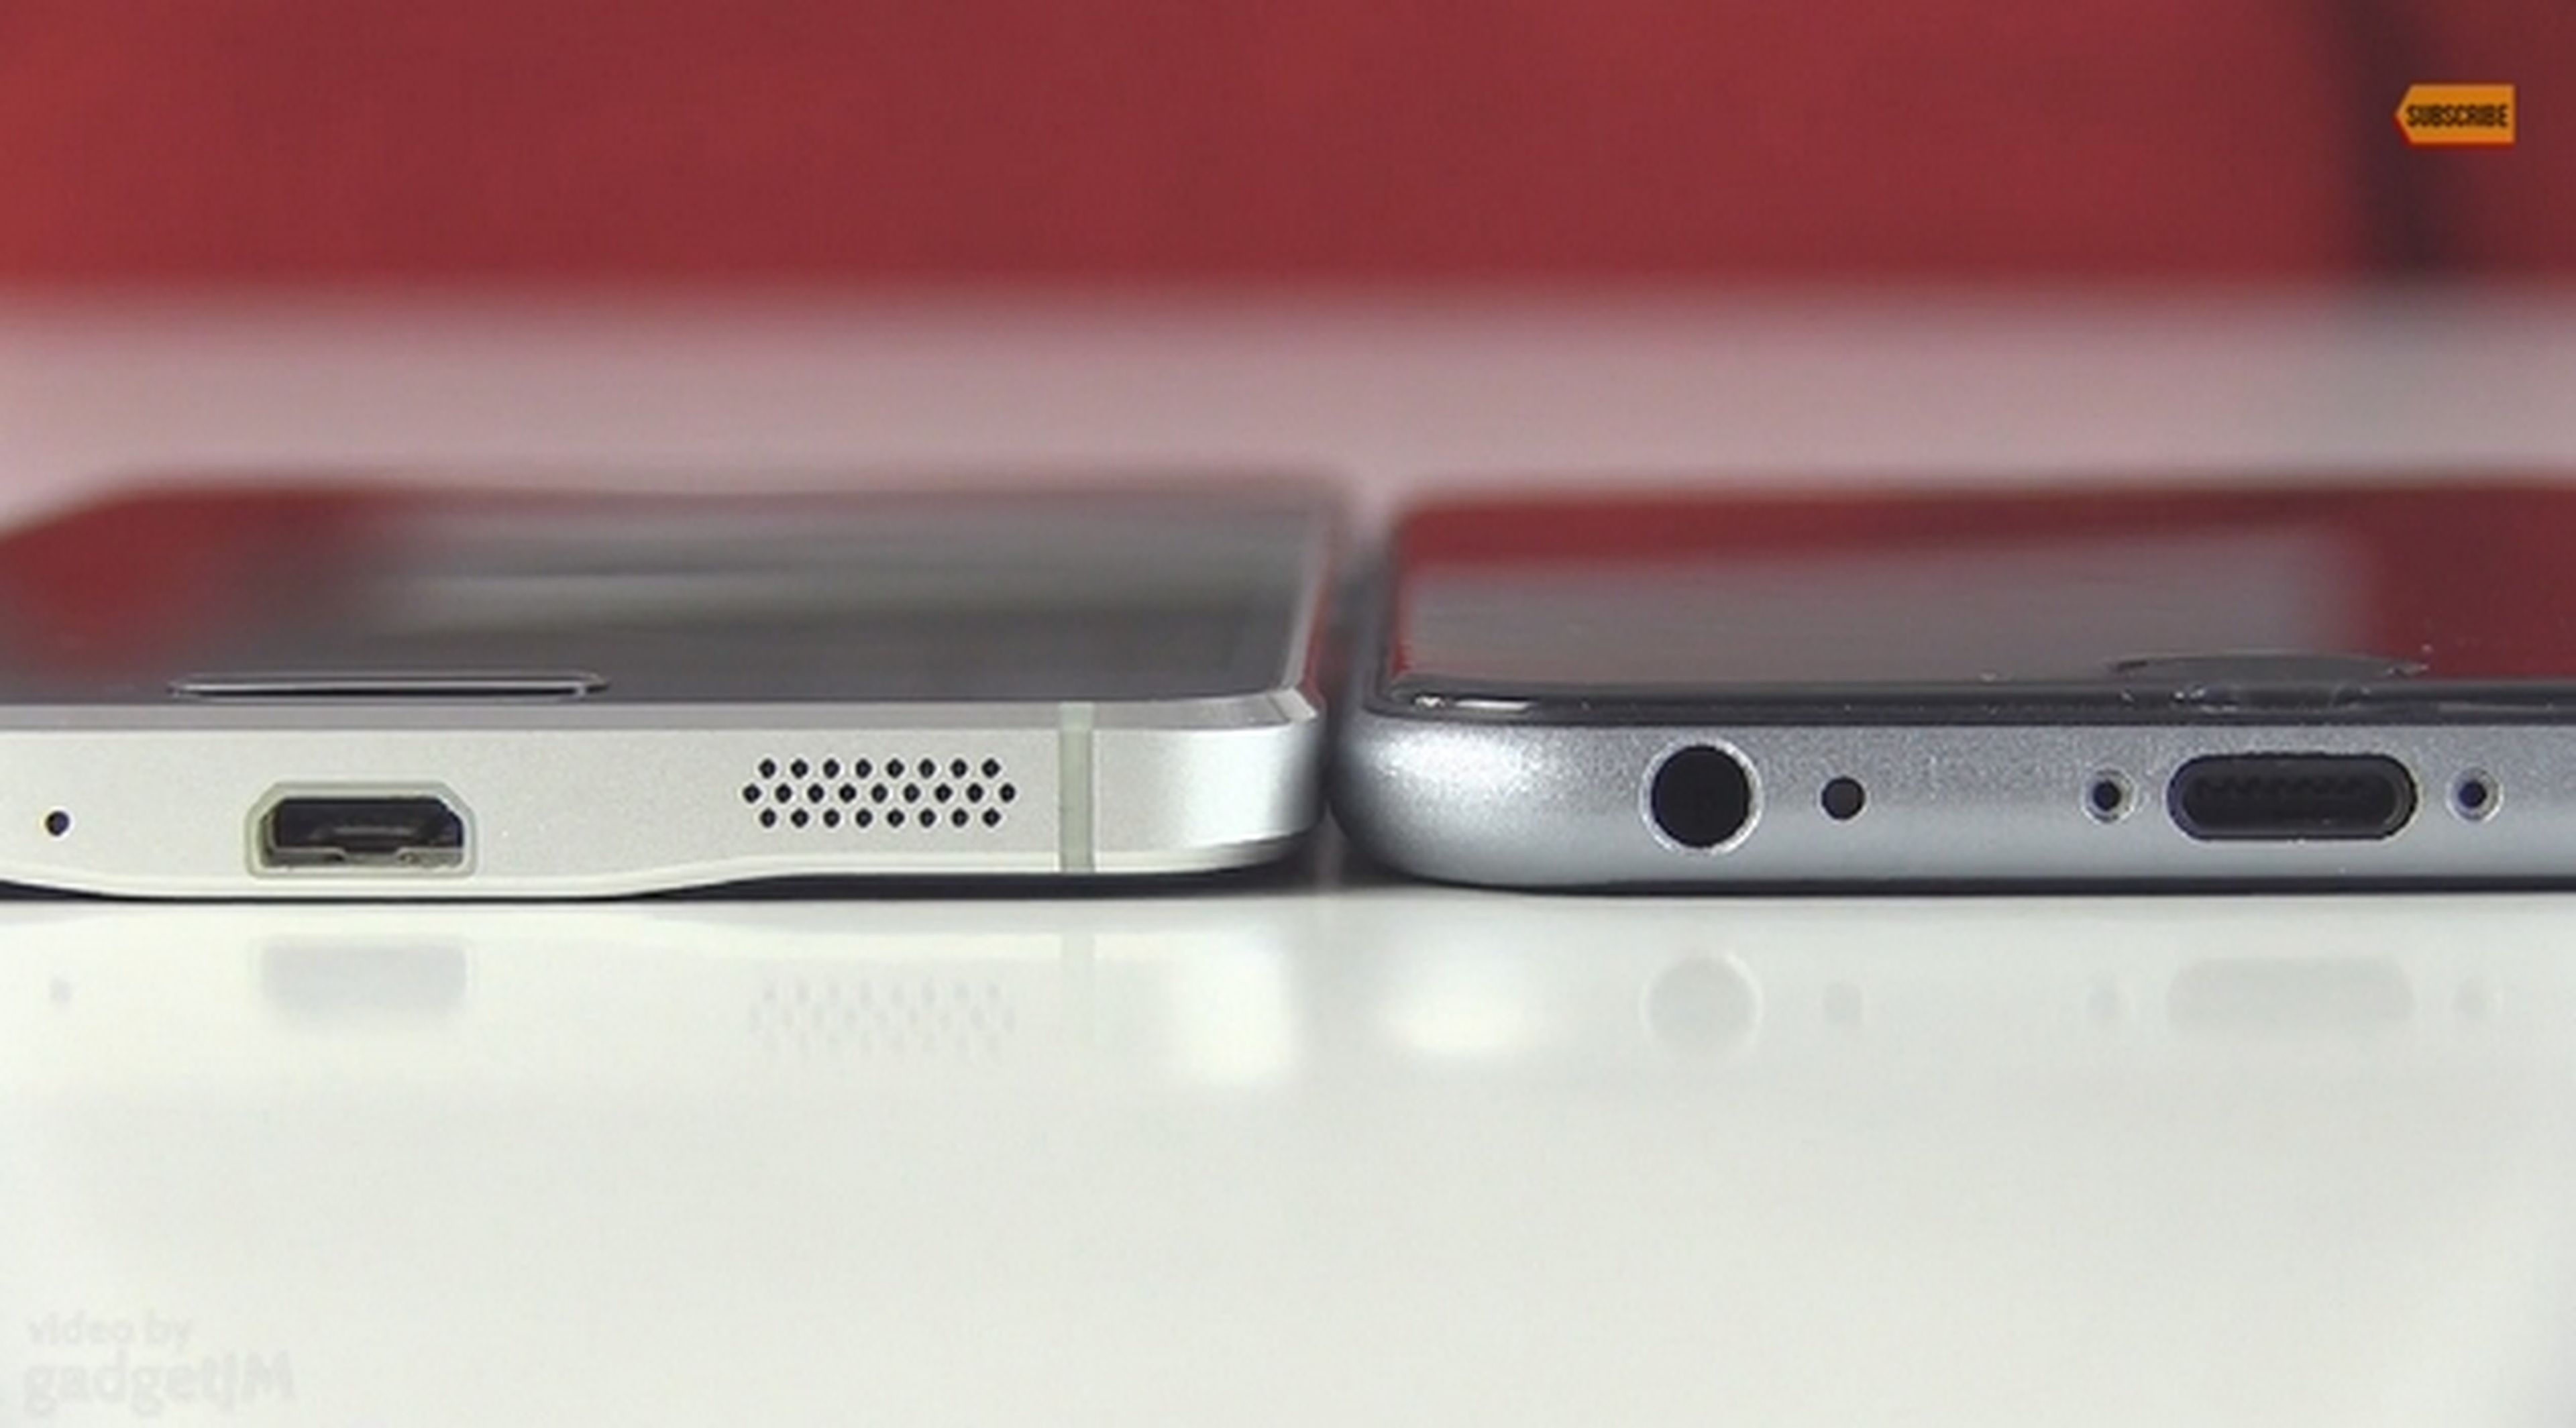 Galaxy Alpha vs. iPhone 6